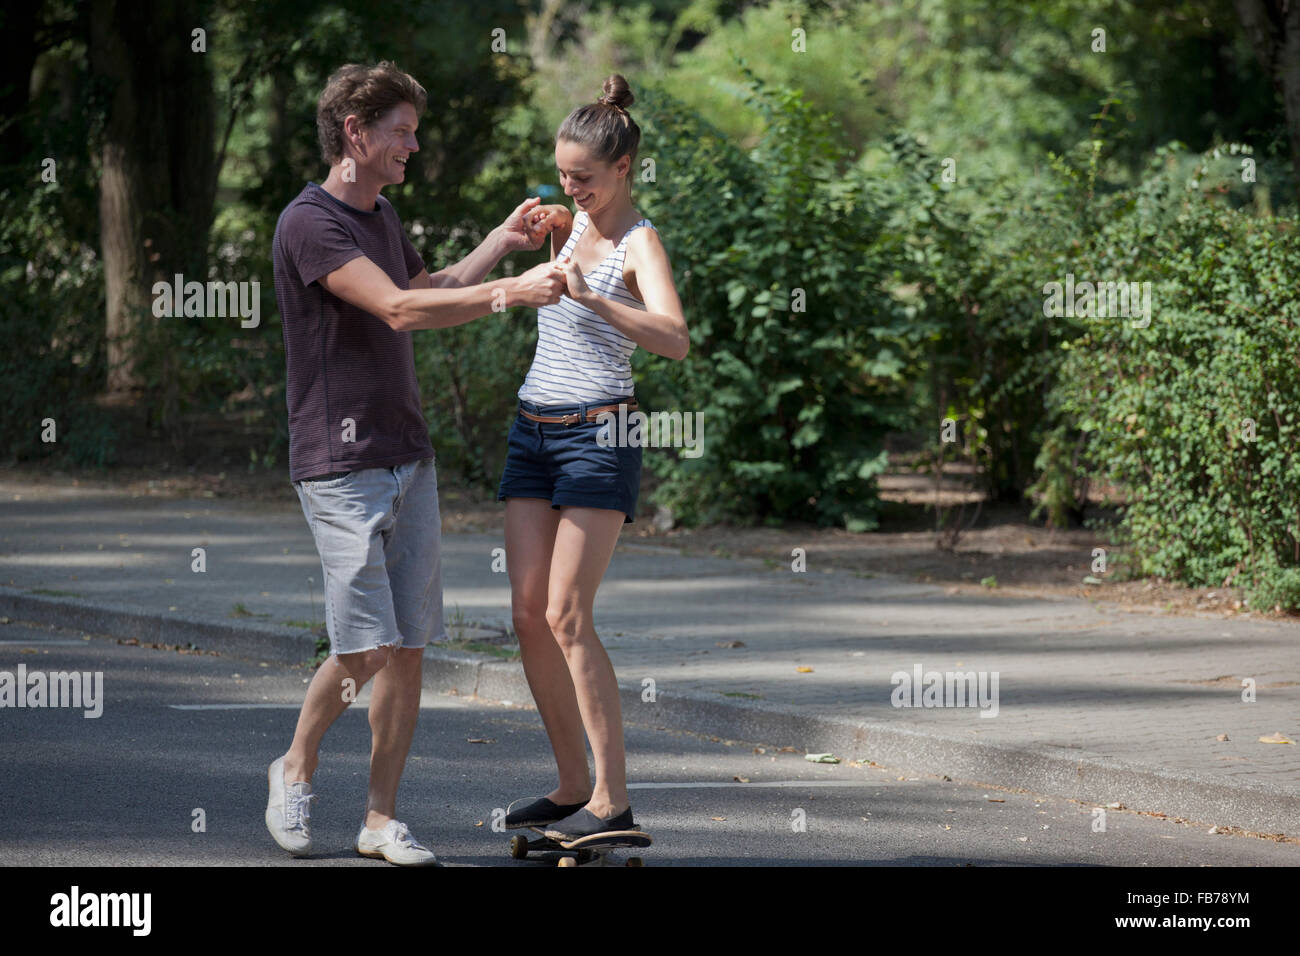 Young man teaching woman to skating Stock Photo